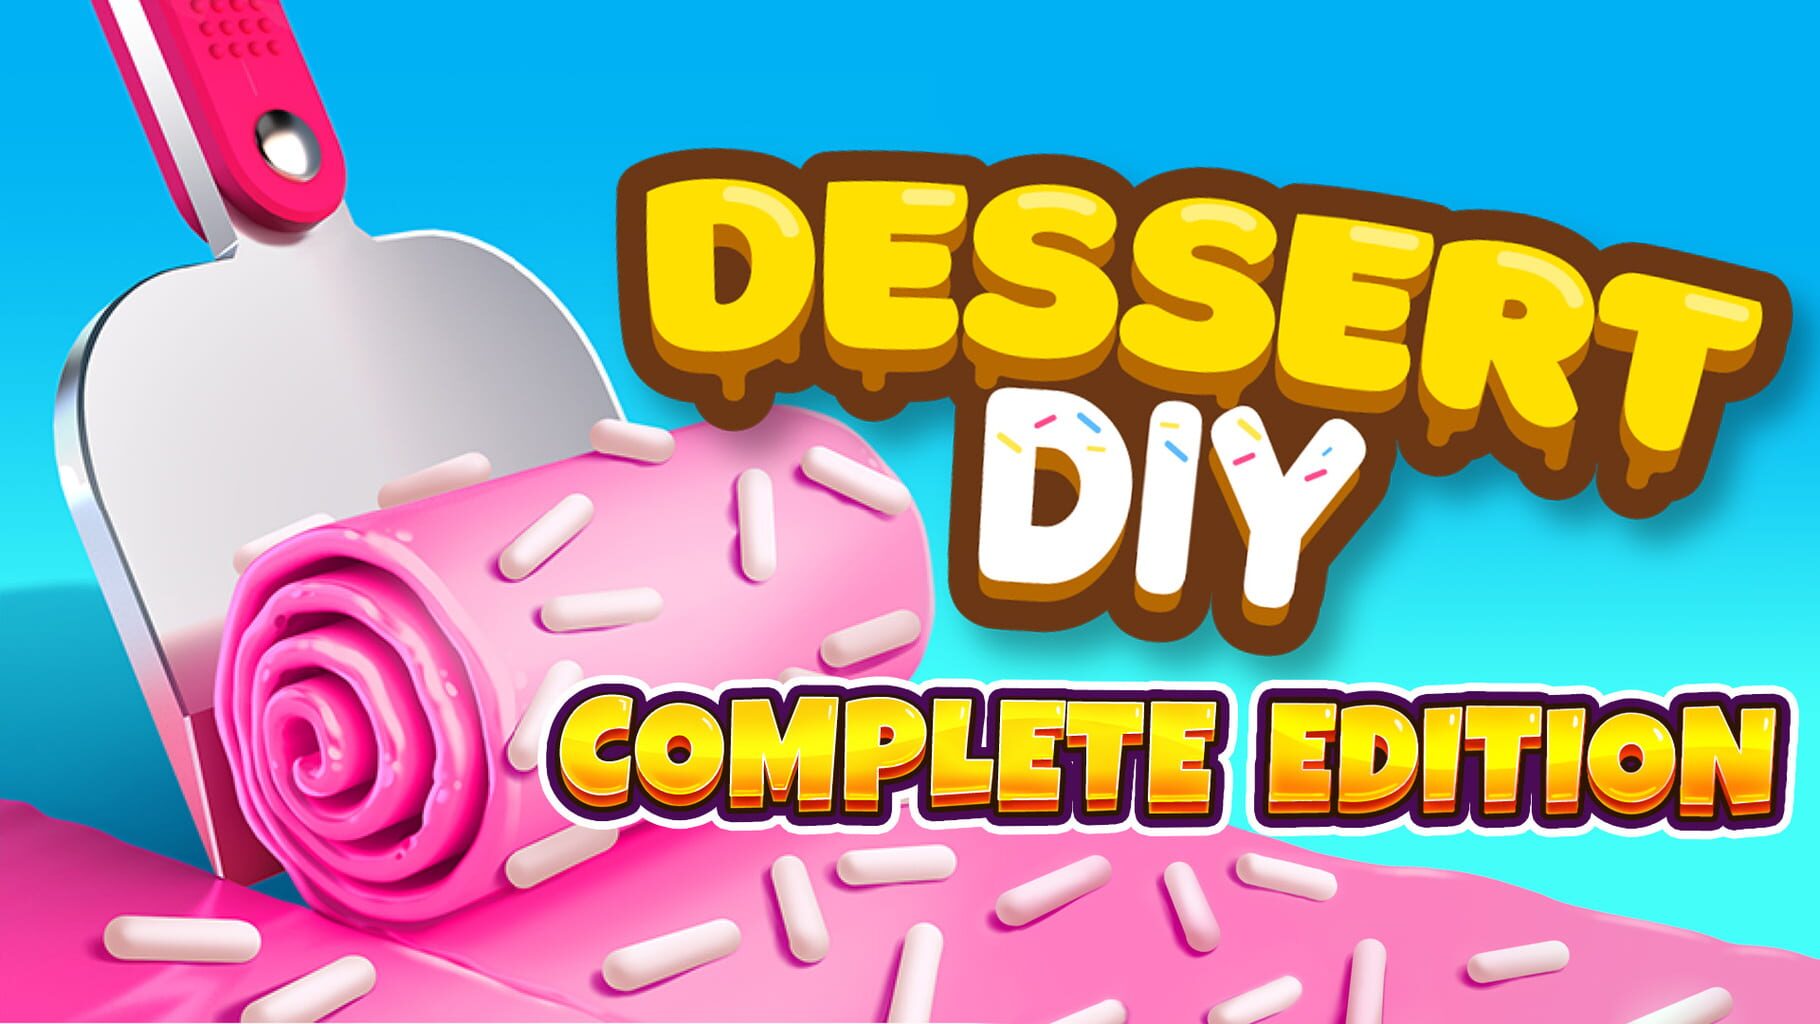 Dessert DIY: Complete Edition artwork